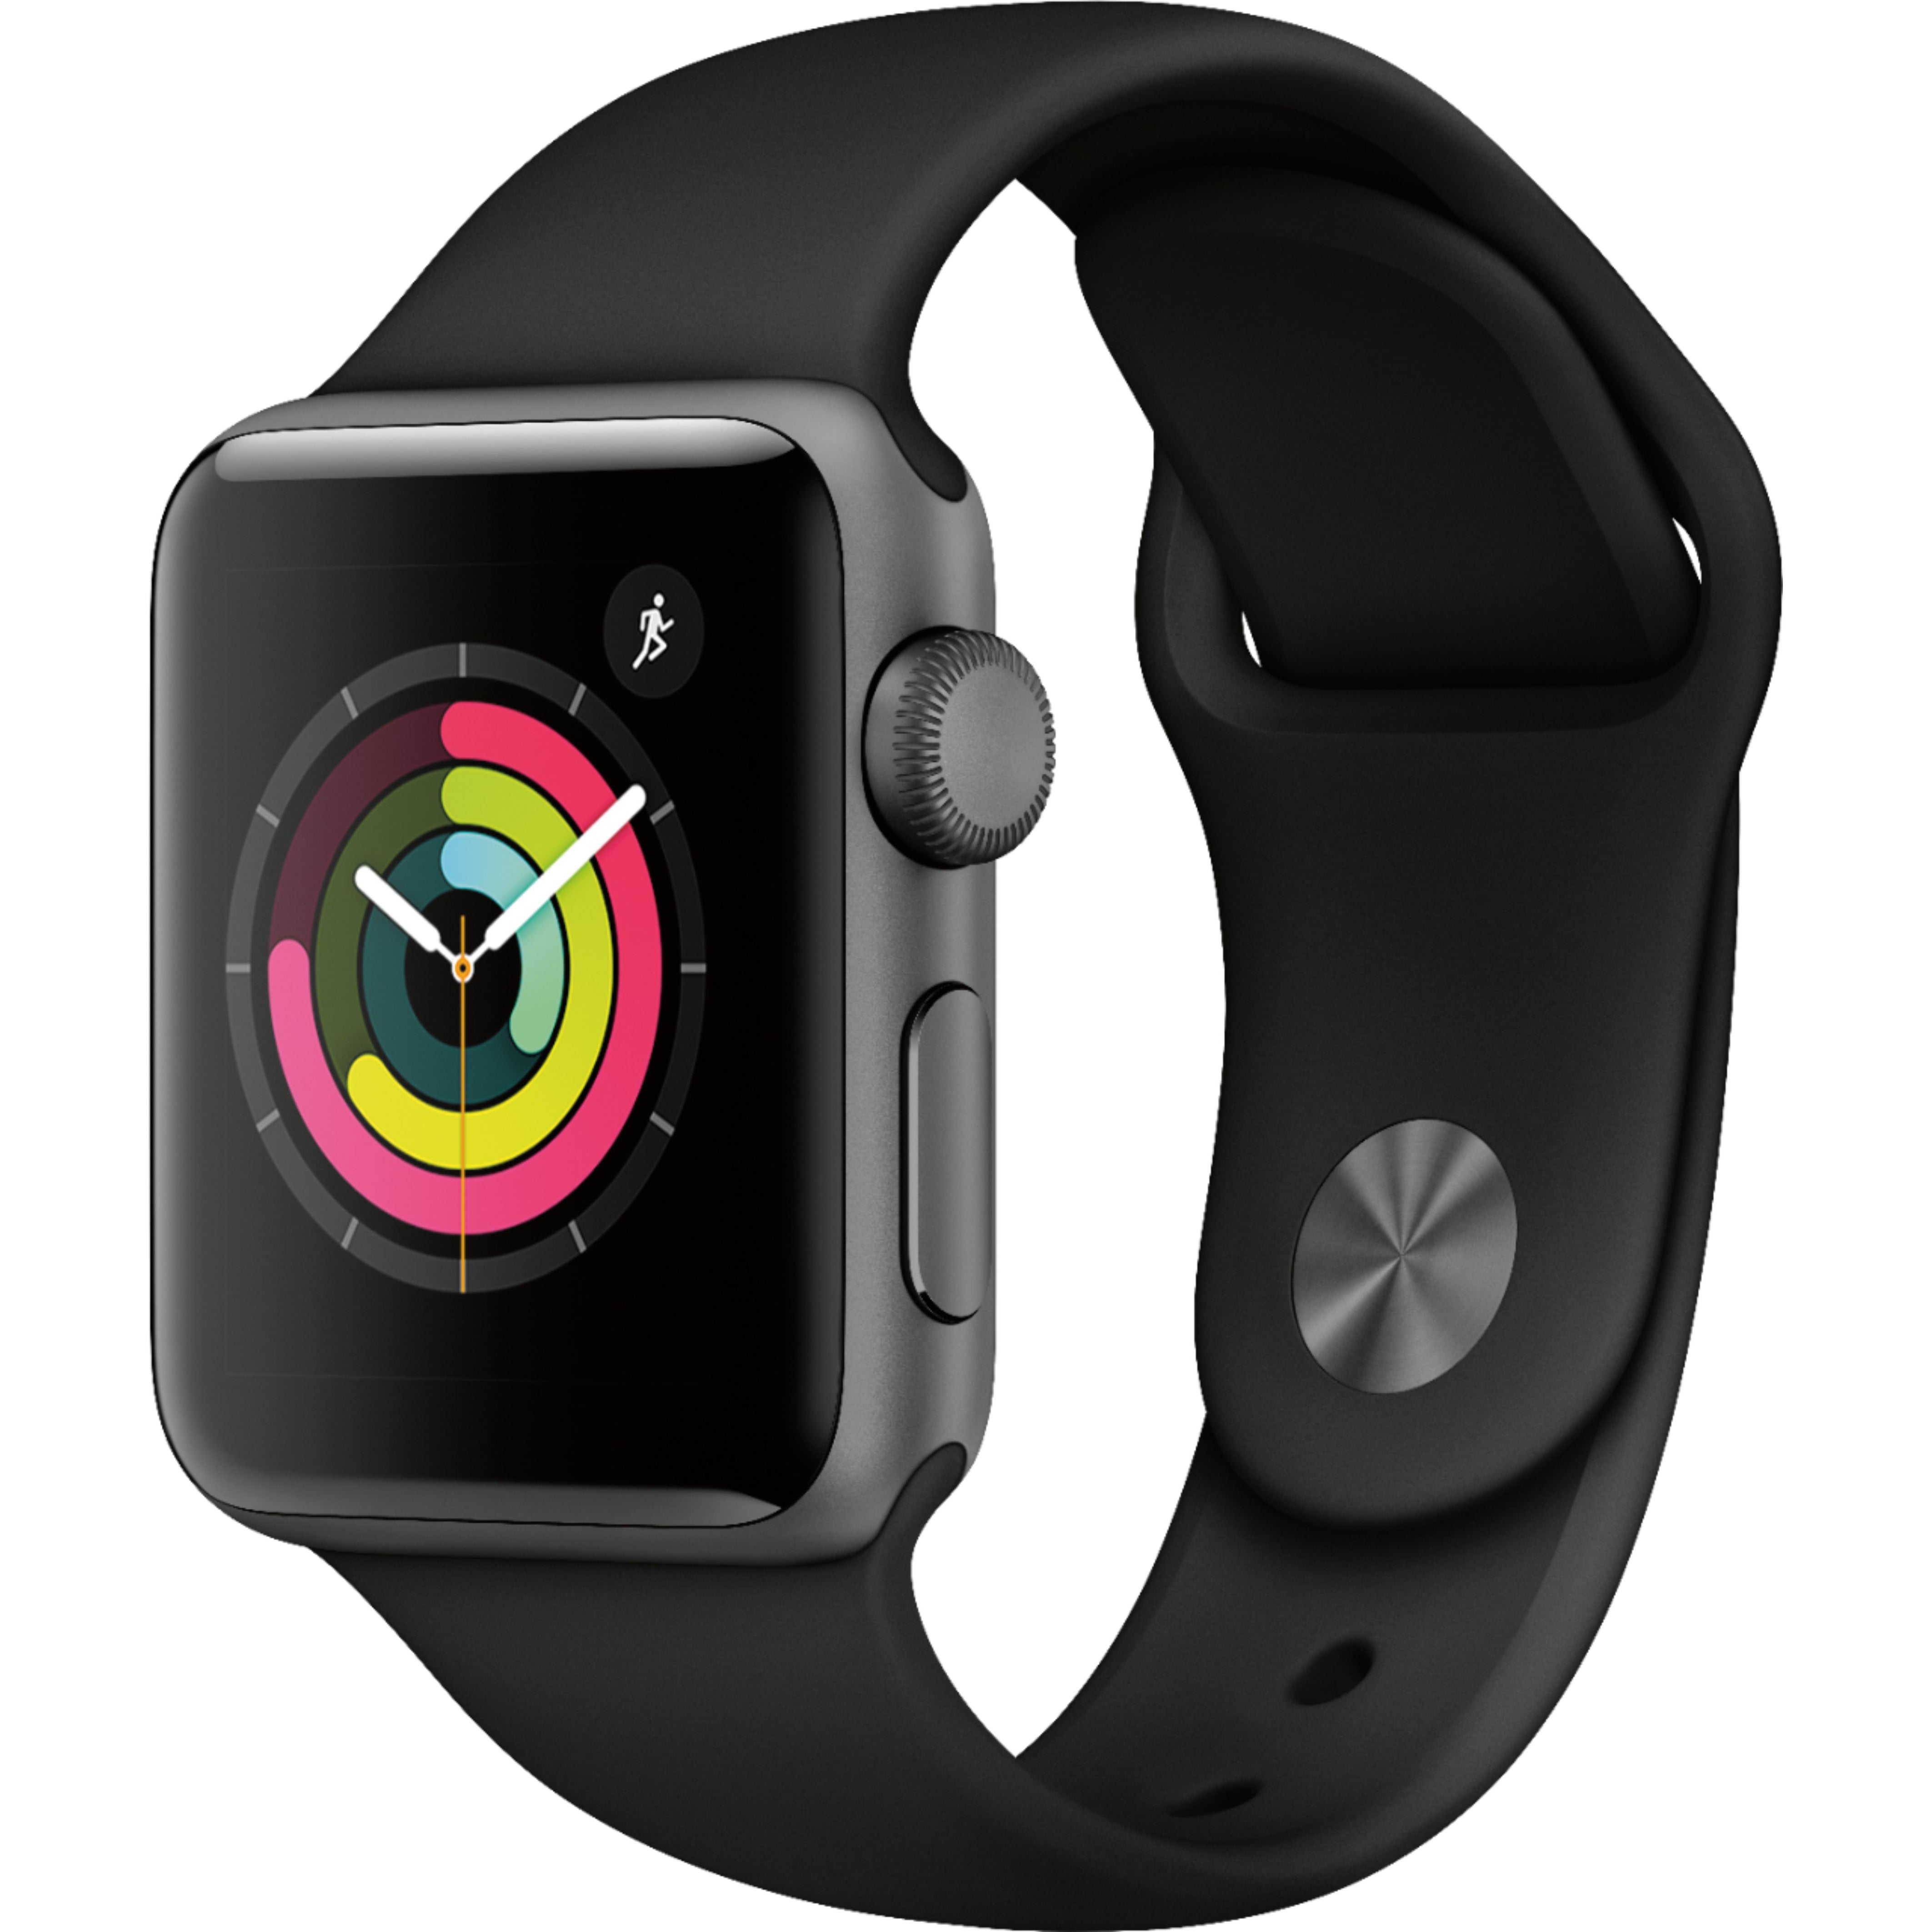 Watch часы 3 42mm. Apple watch s3 38mm Space Gray. Часы эпл вотч 3. Apple watch s3 42mm Space Grey. Apple watch 3 42 mm.